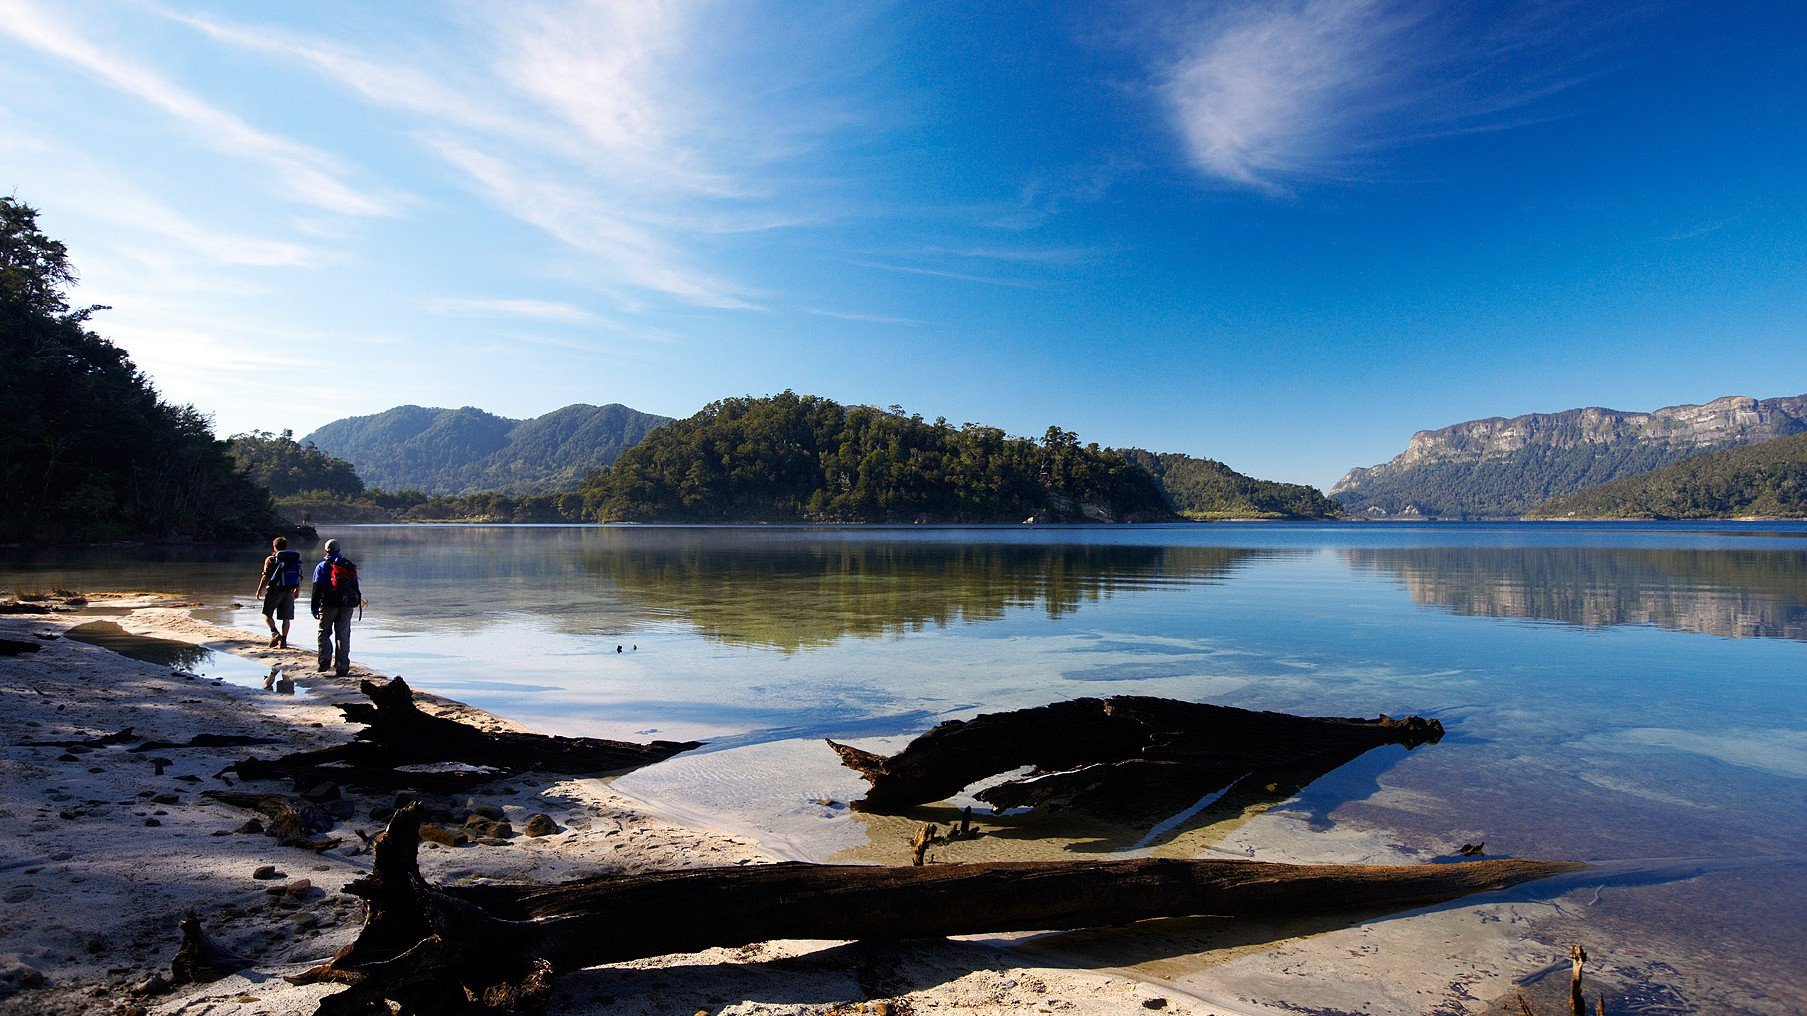 From the Maori, Waikaremoana, translates to 'Sea of rippling waters'. 